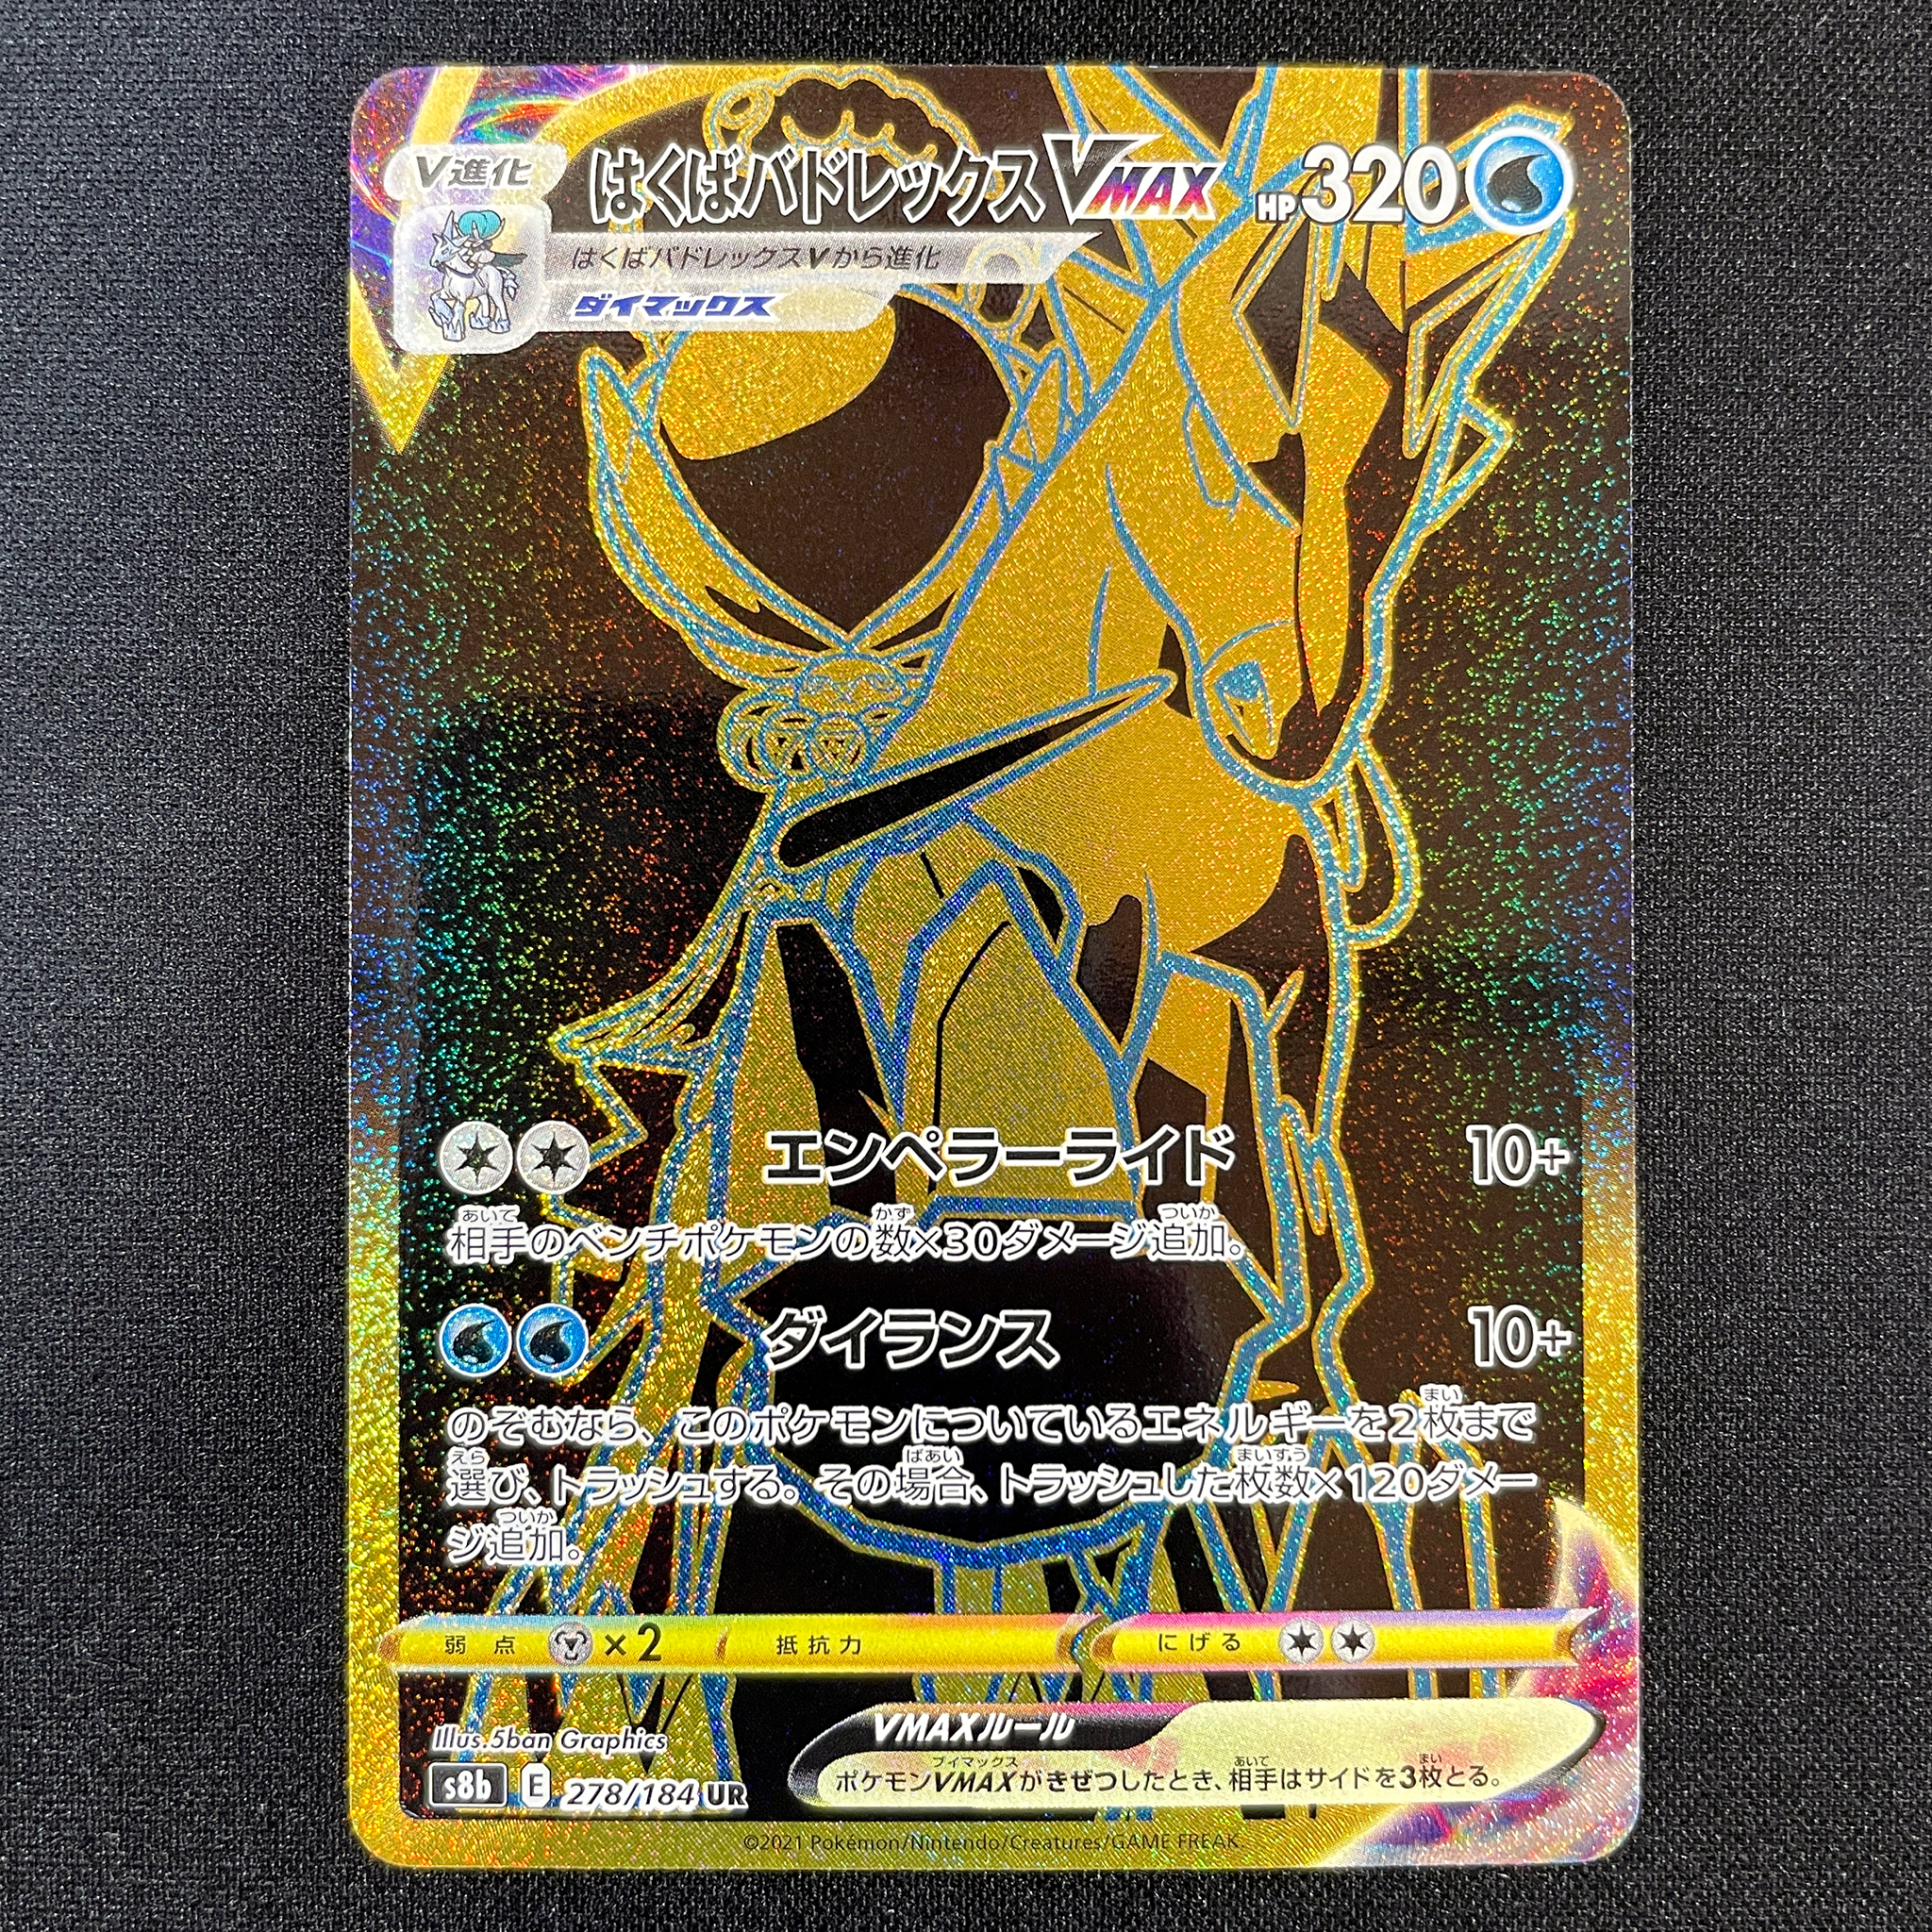 Arceus Vmax  Cool pokemon cards, Pokemon cards legendary, Rare pokemon  cards